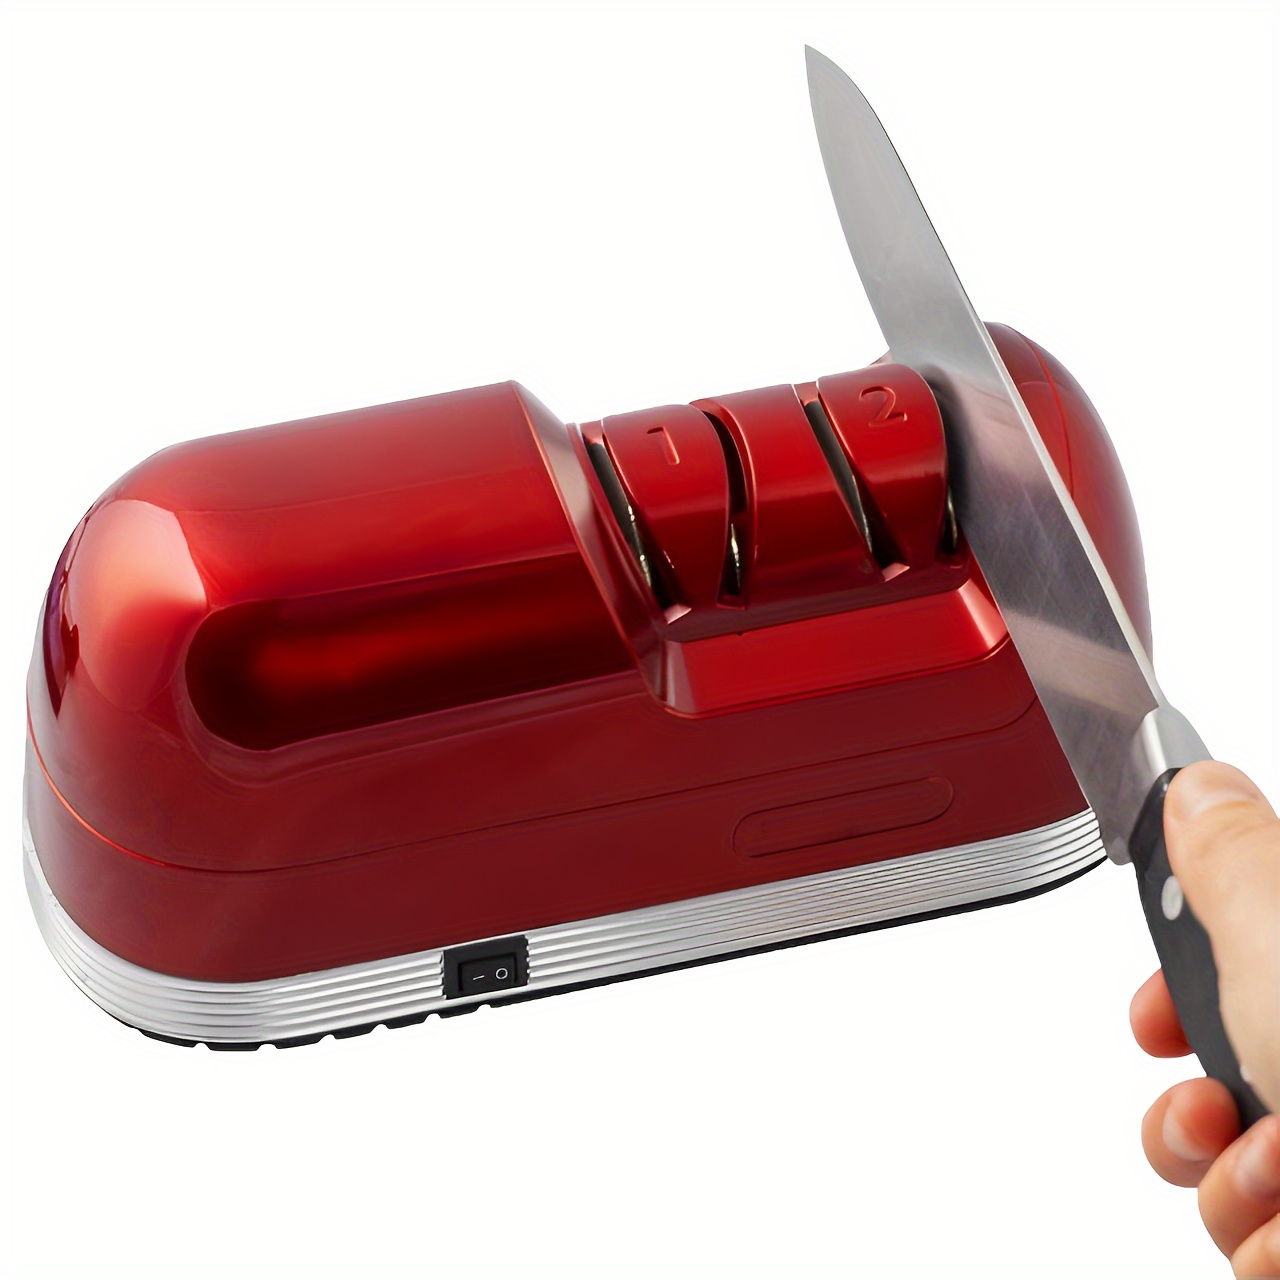 Professional Electric Knife Sharpener 20 degree 2 stage - Temu